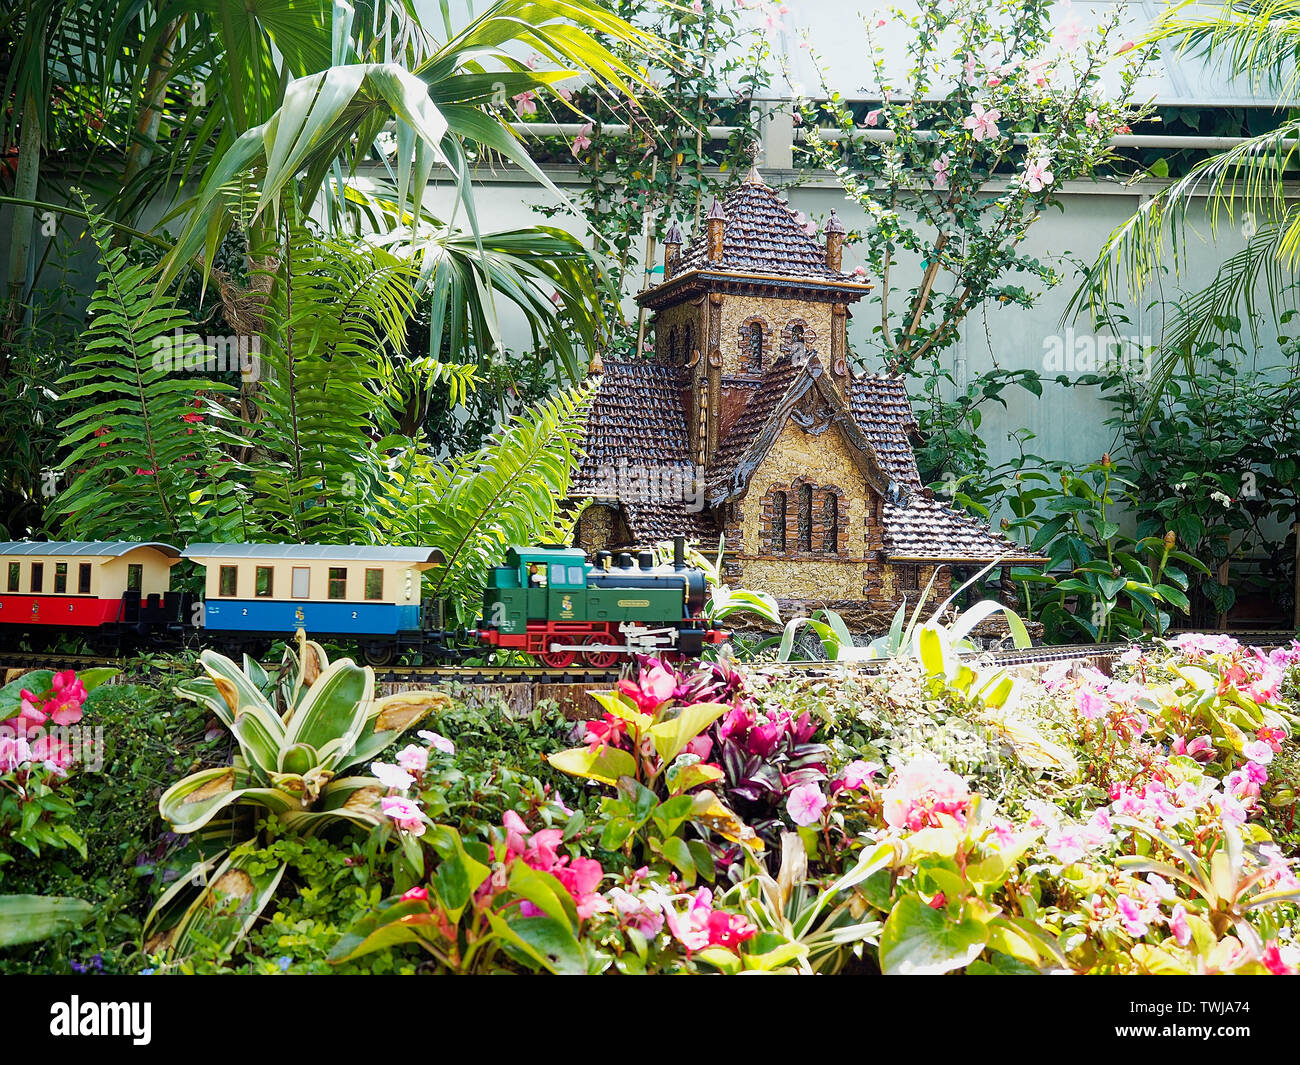 Miniature Train Running Through Garden Conservatory At Biltmore